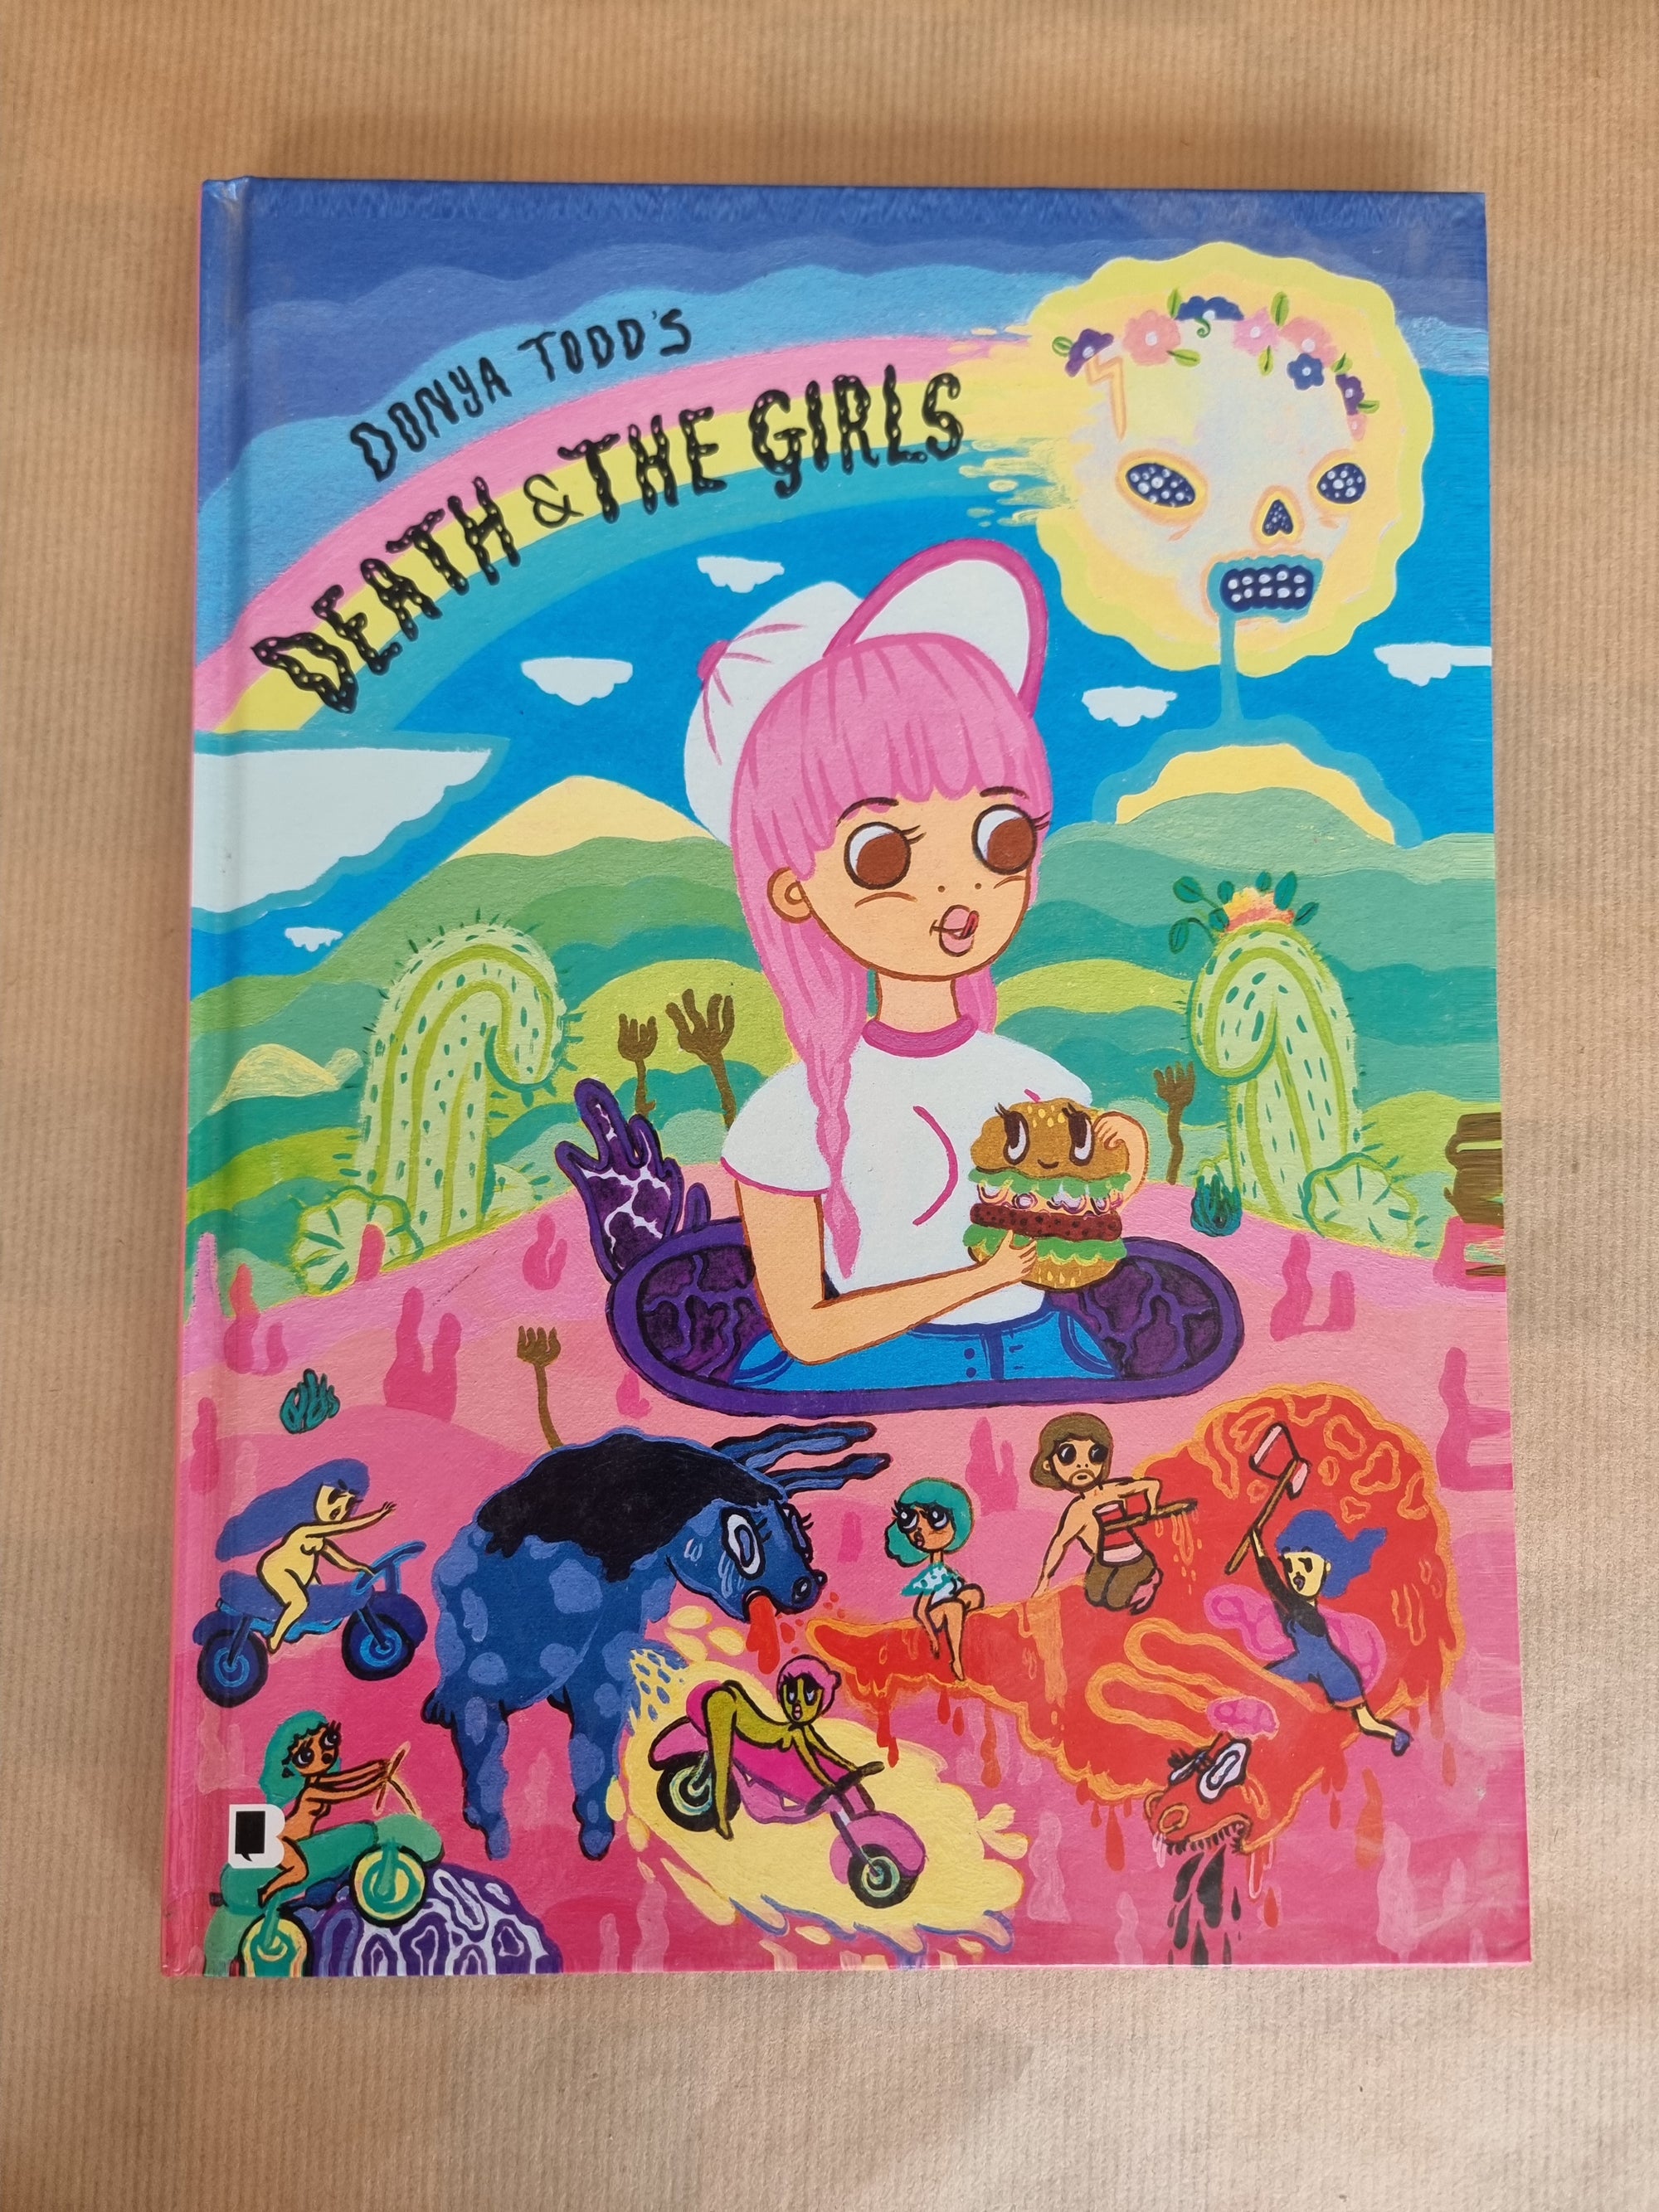 Death & The Girls